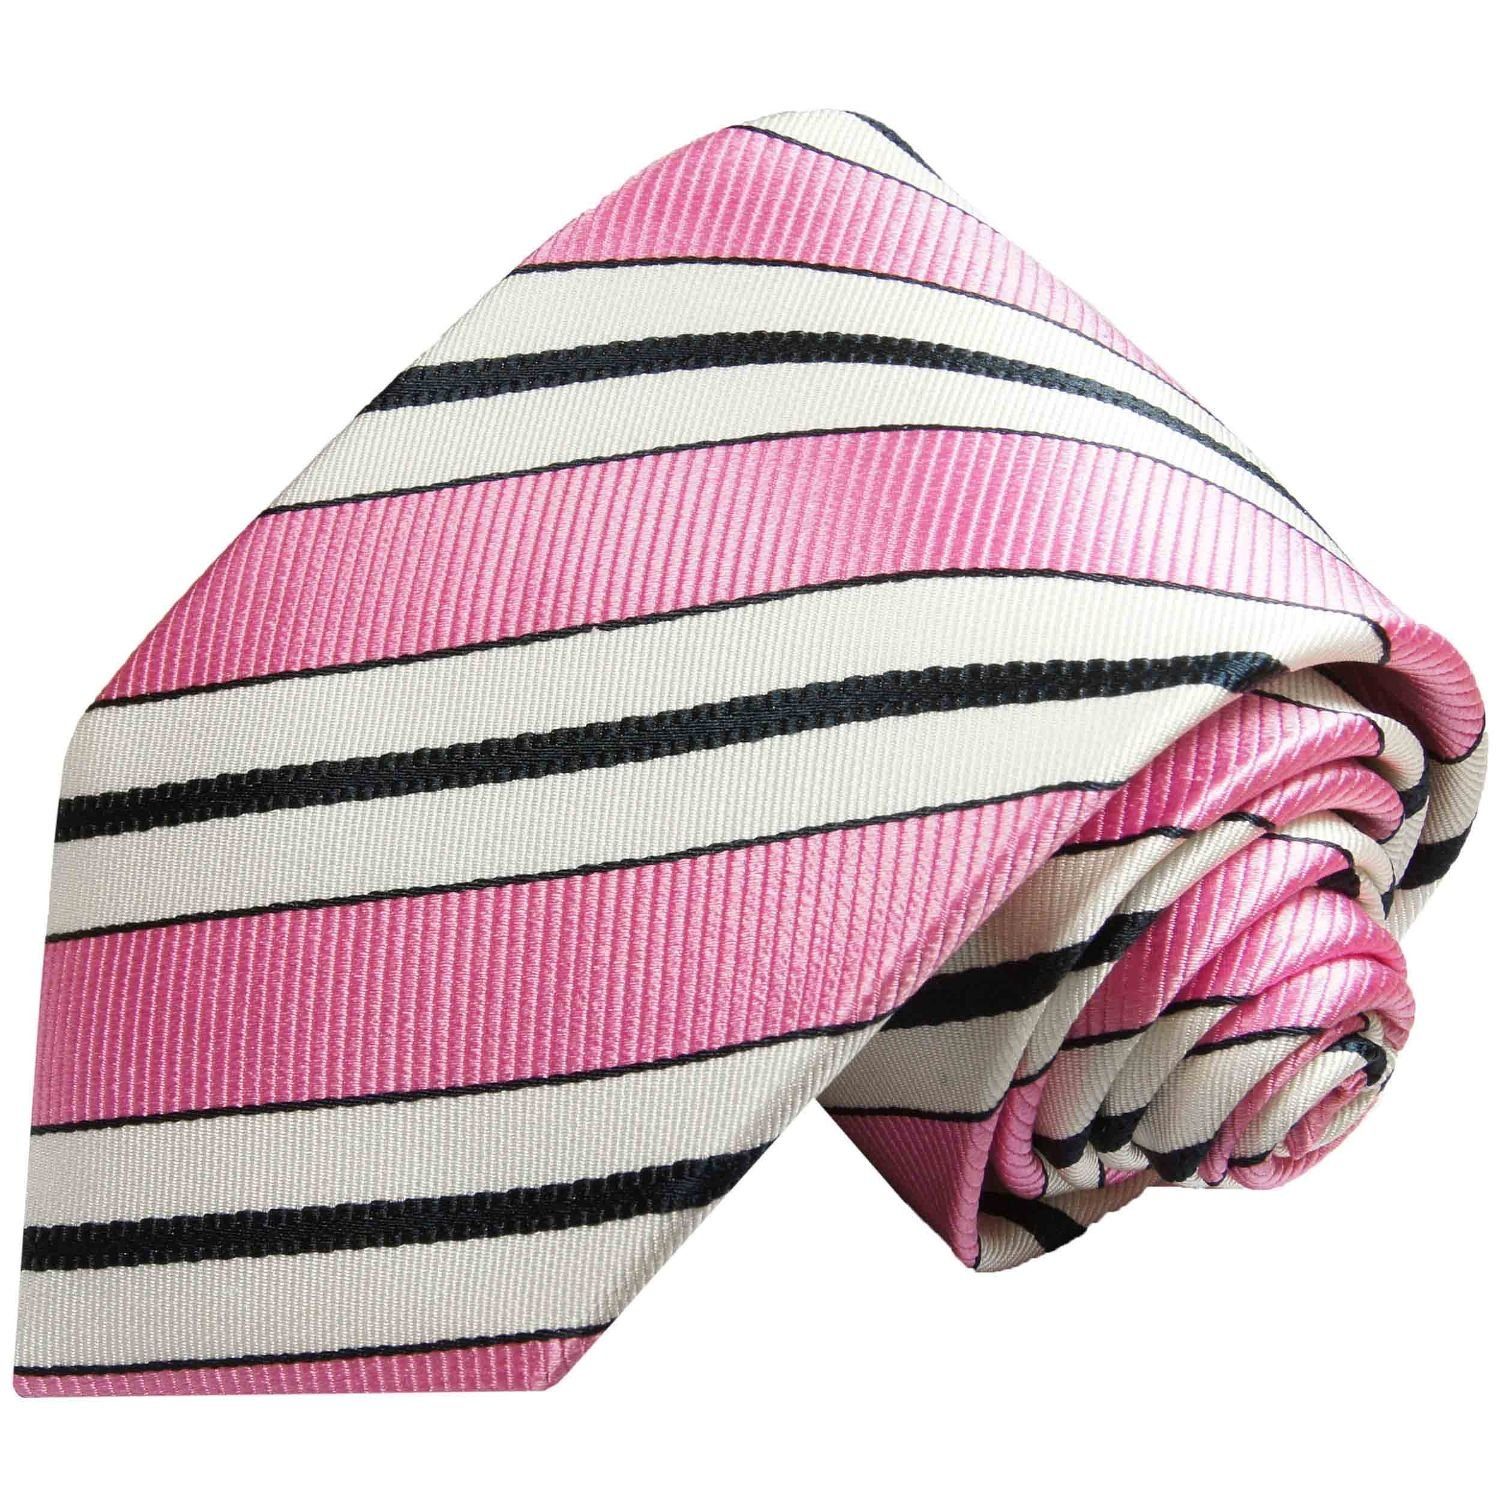 Paul Malone Krawatte Herren Seidenkrawatte Schlips modern gestreift 100% Seide Schmal (6cm), pink 110 | Breite Krawatten